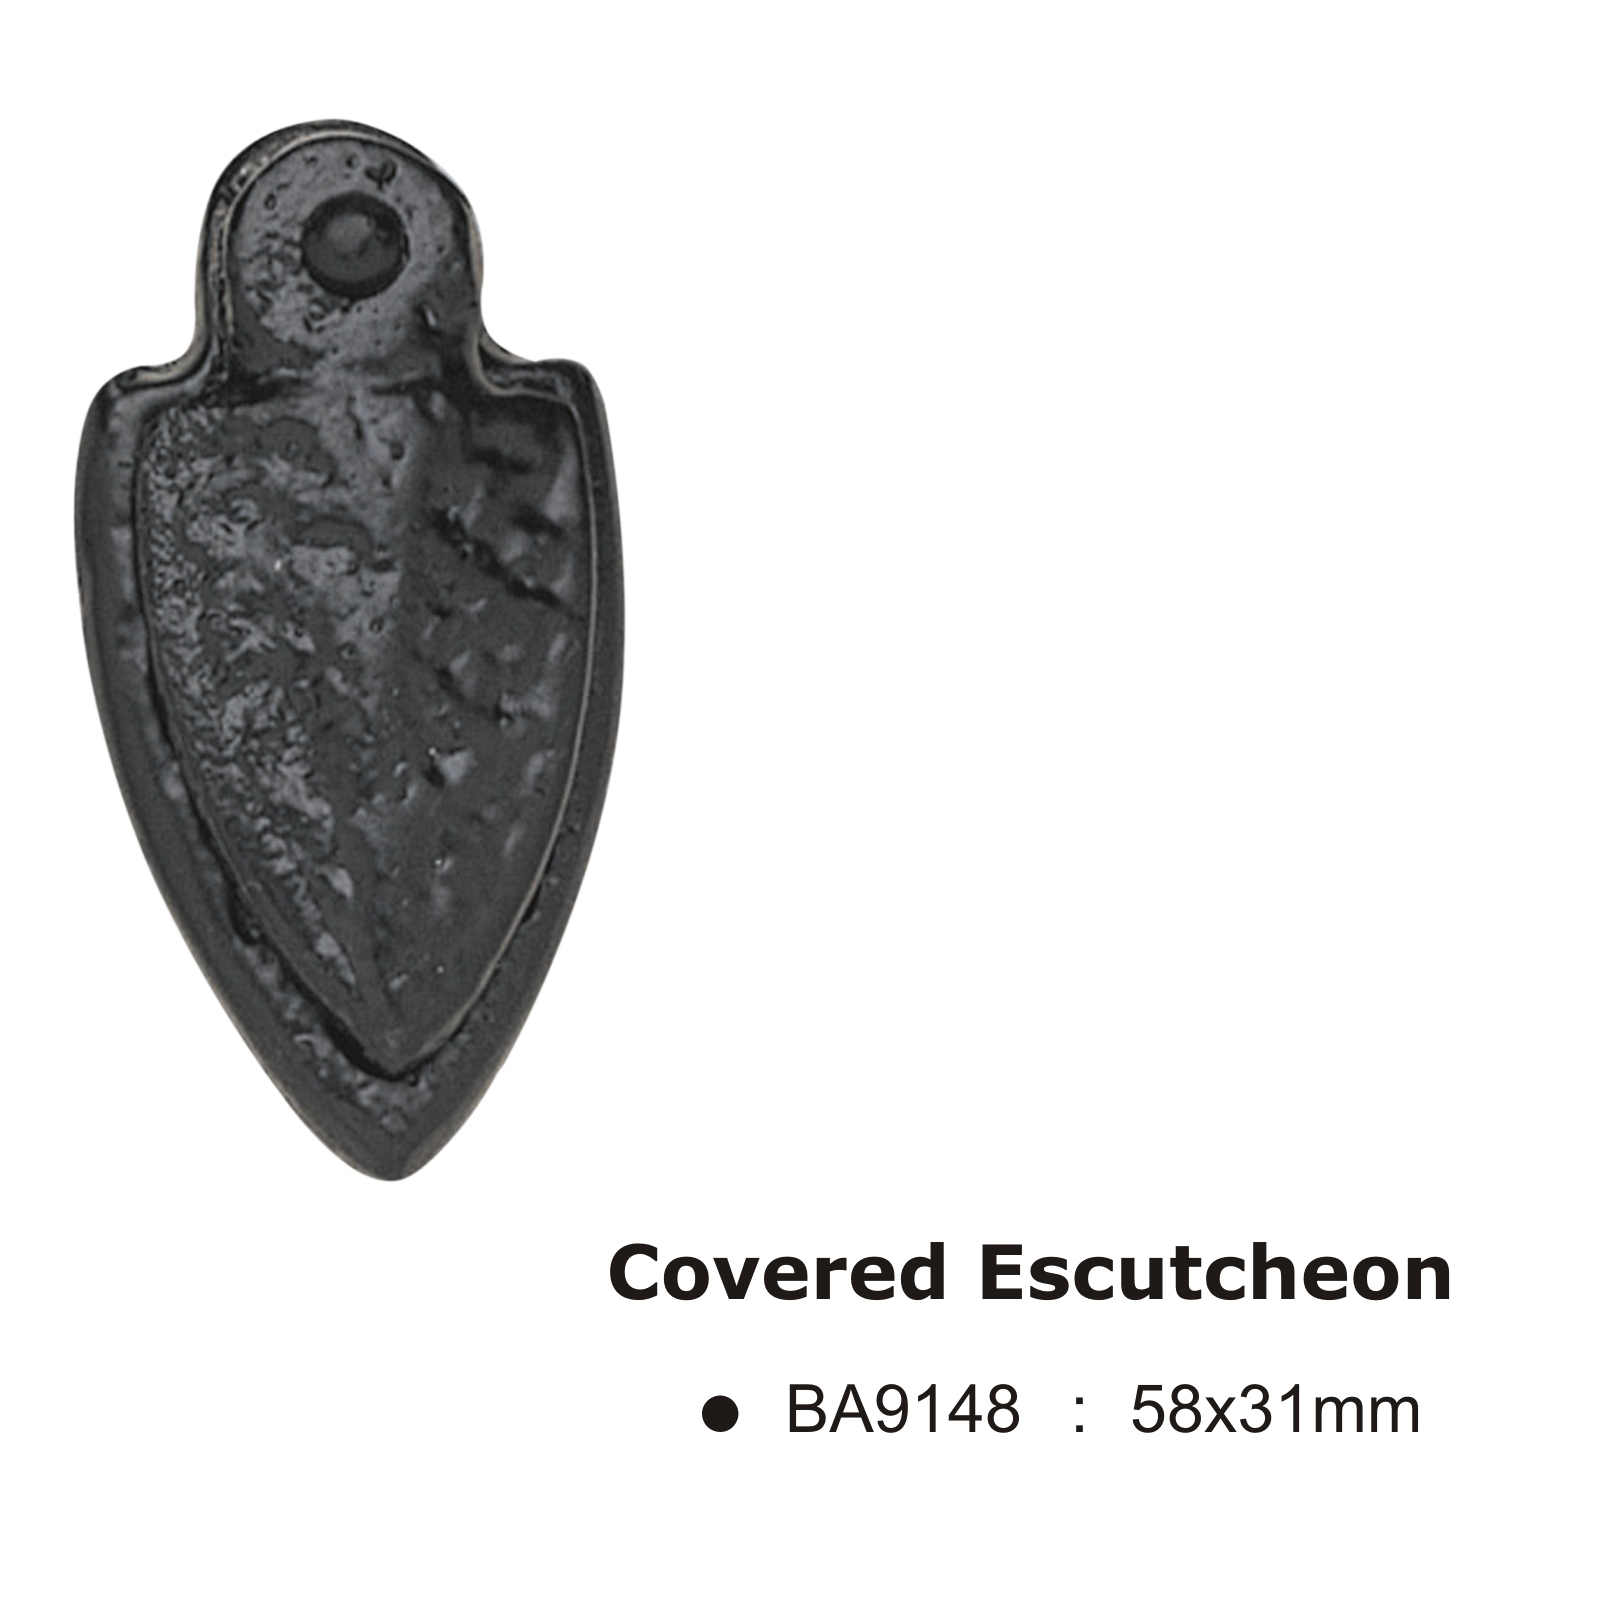 Covered Escutcheon -58x31mm